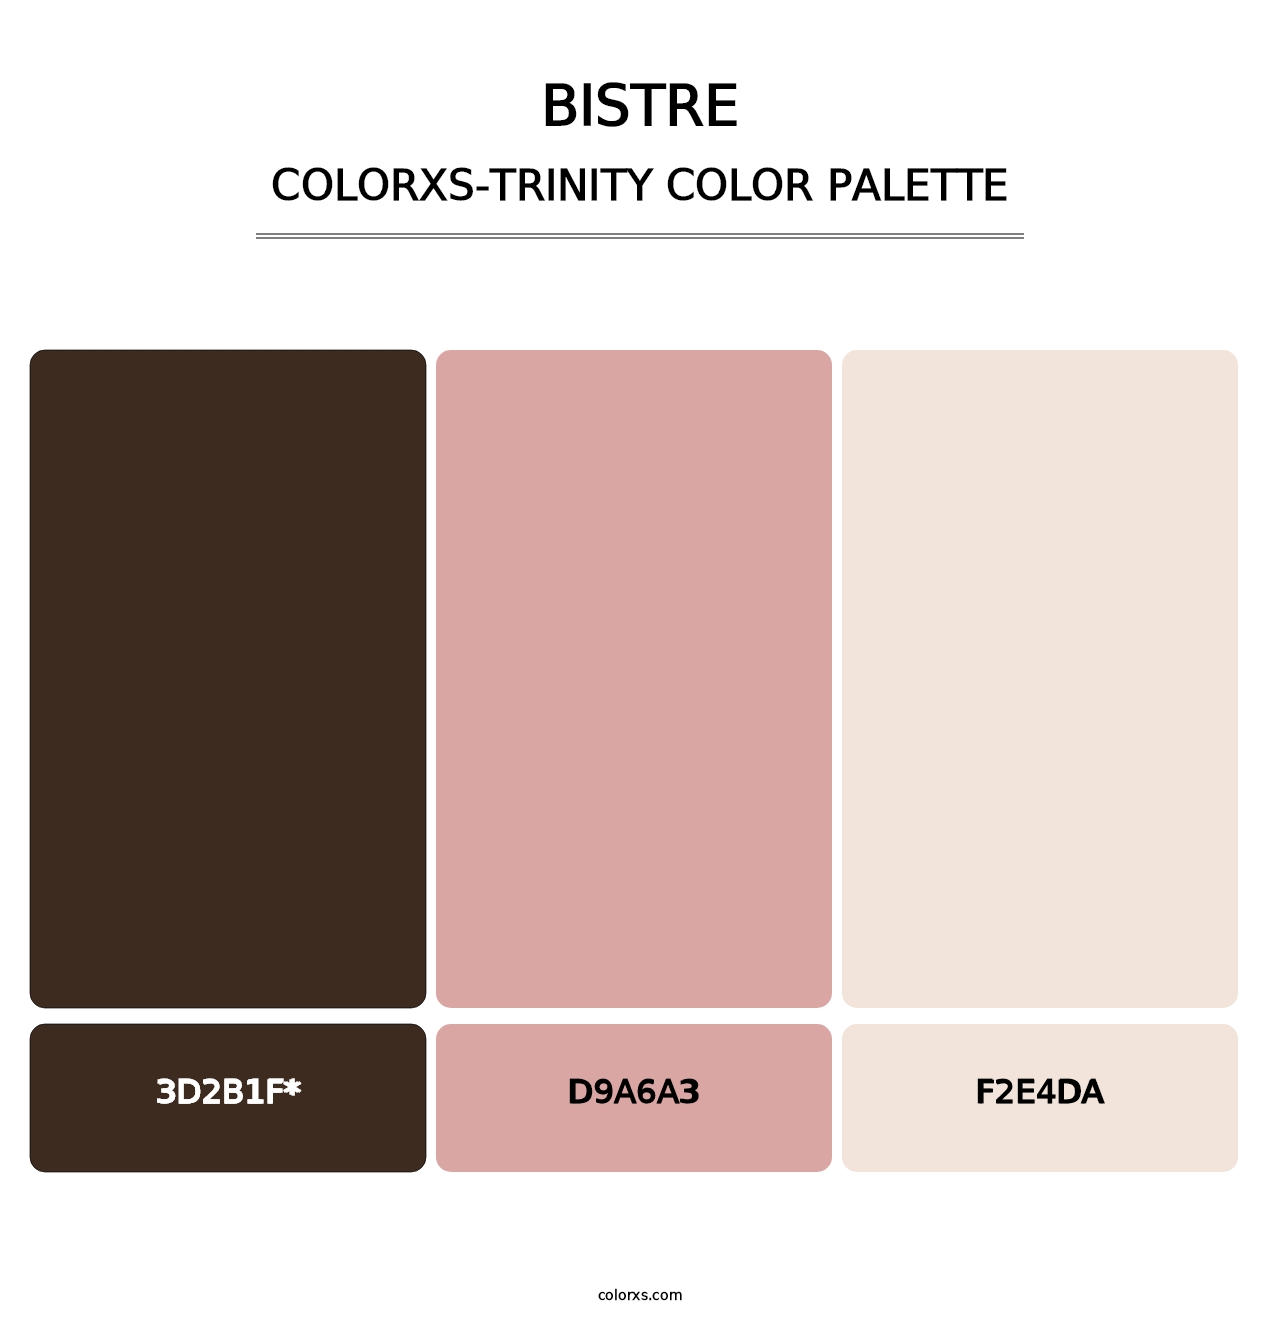 Bistre - Colorxs Trinity Palette